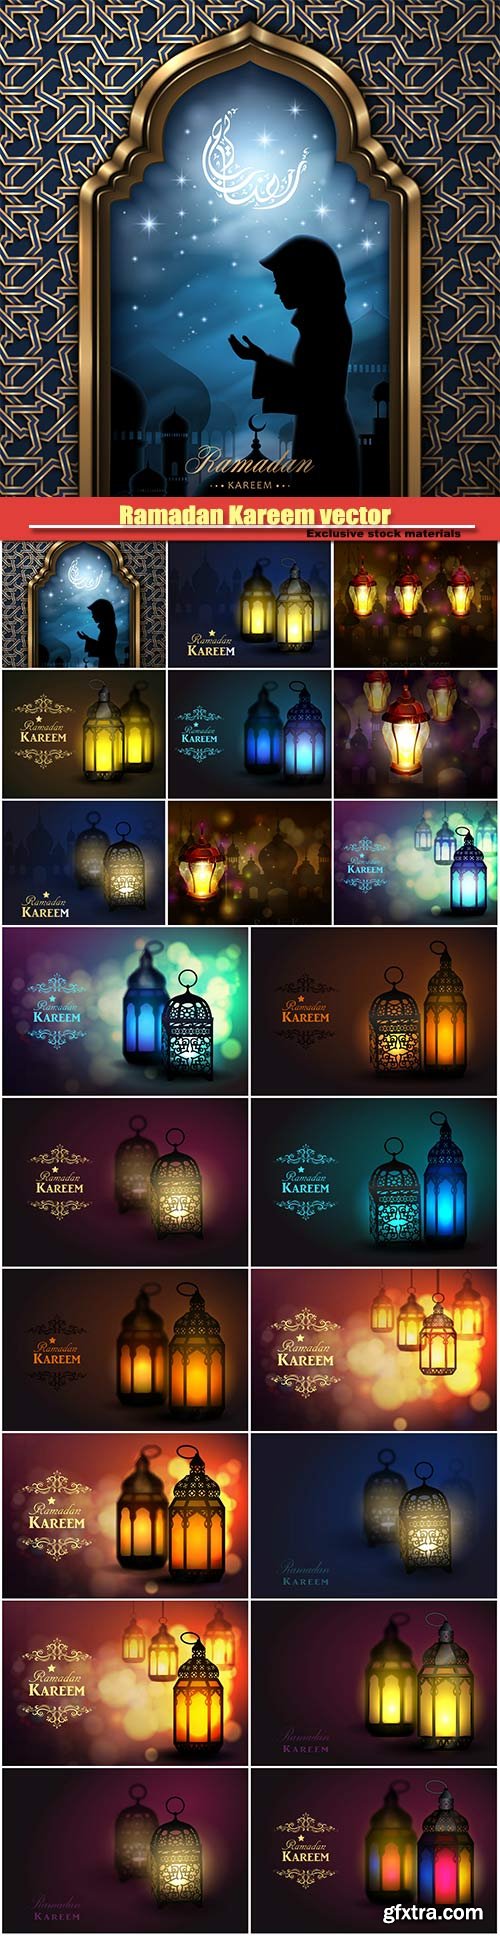 Arabic lamps with lights for Ramadan Kareem vector